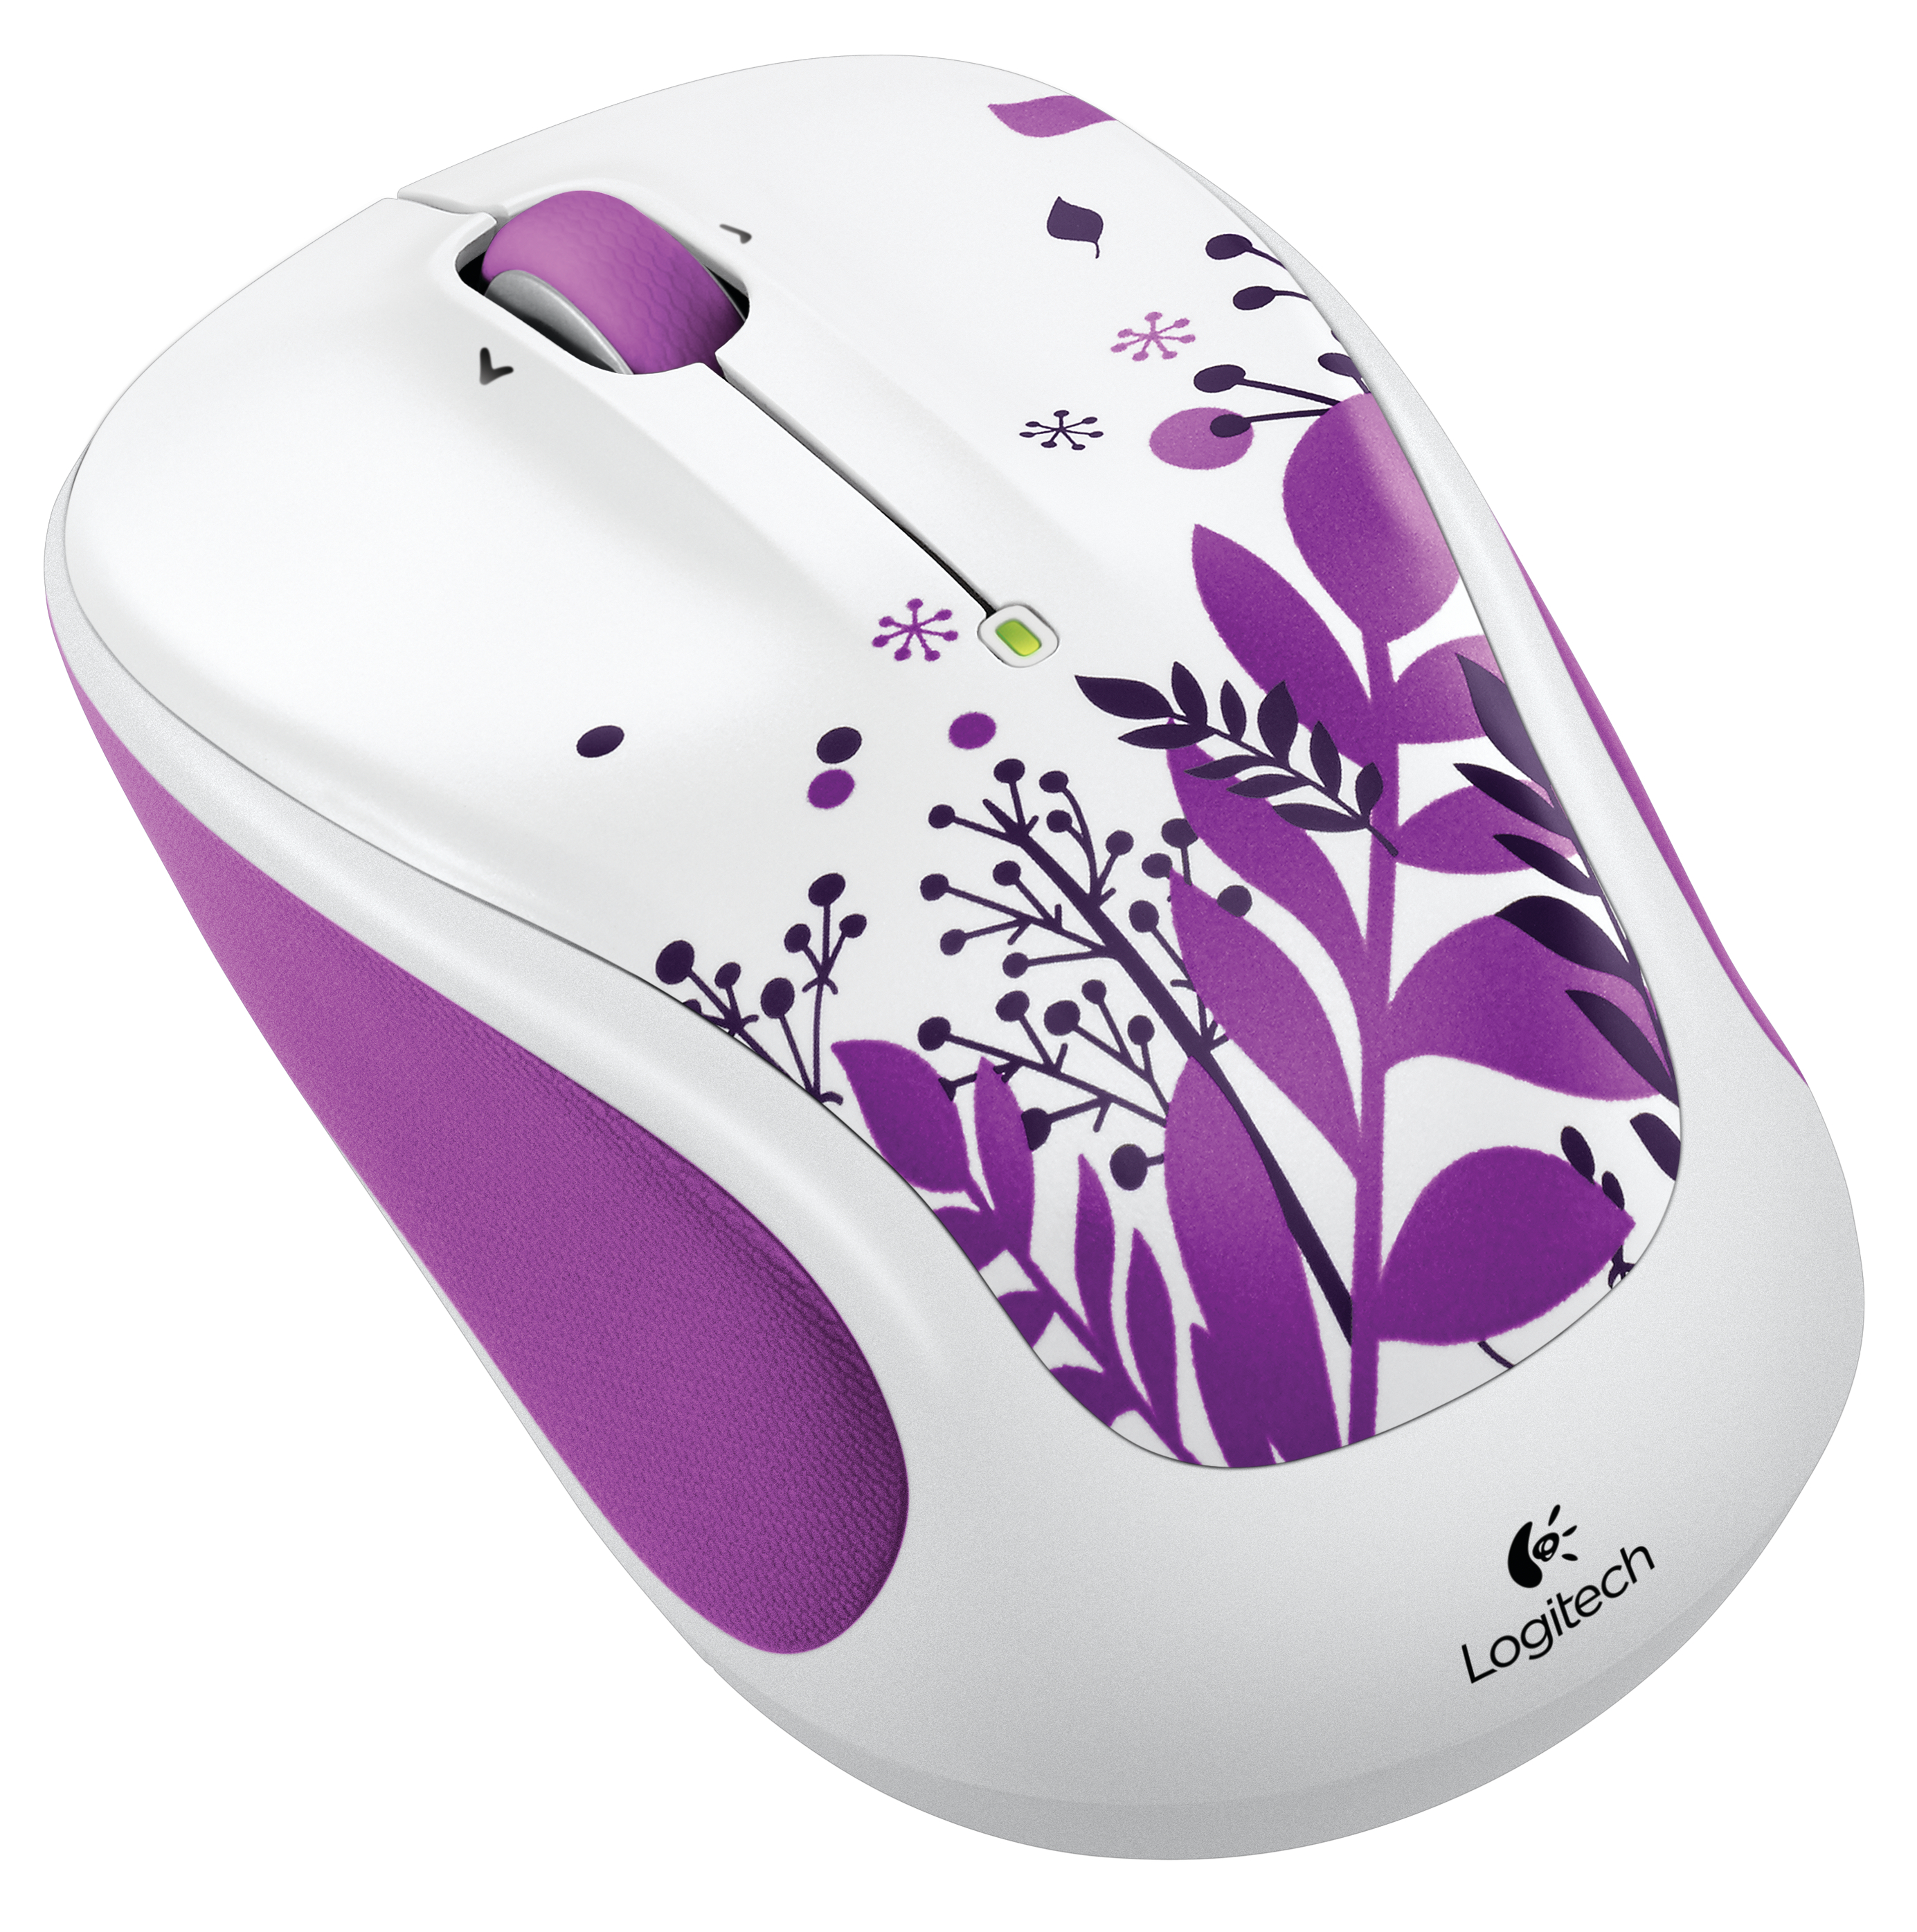 Мышка для компьютера. Logitech m325 цветная. Мышь m325. Мышь Logitech Wireless Mouse m238 Purple Zigzag White-Purple USB. Мышь Logitech сиреневая.